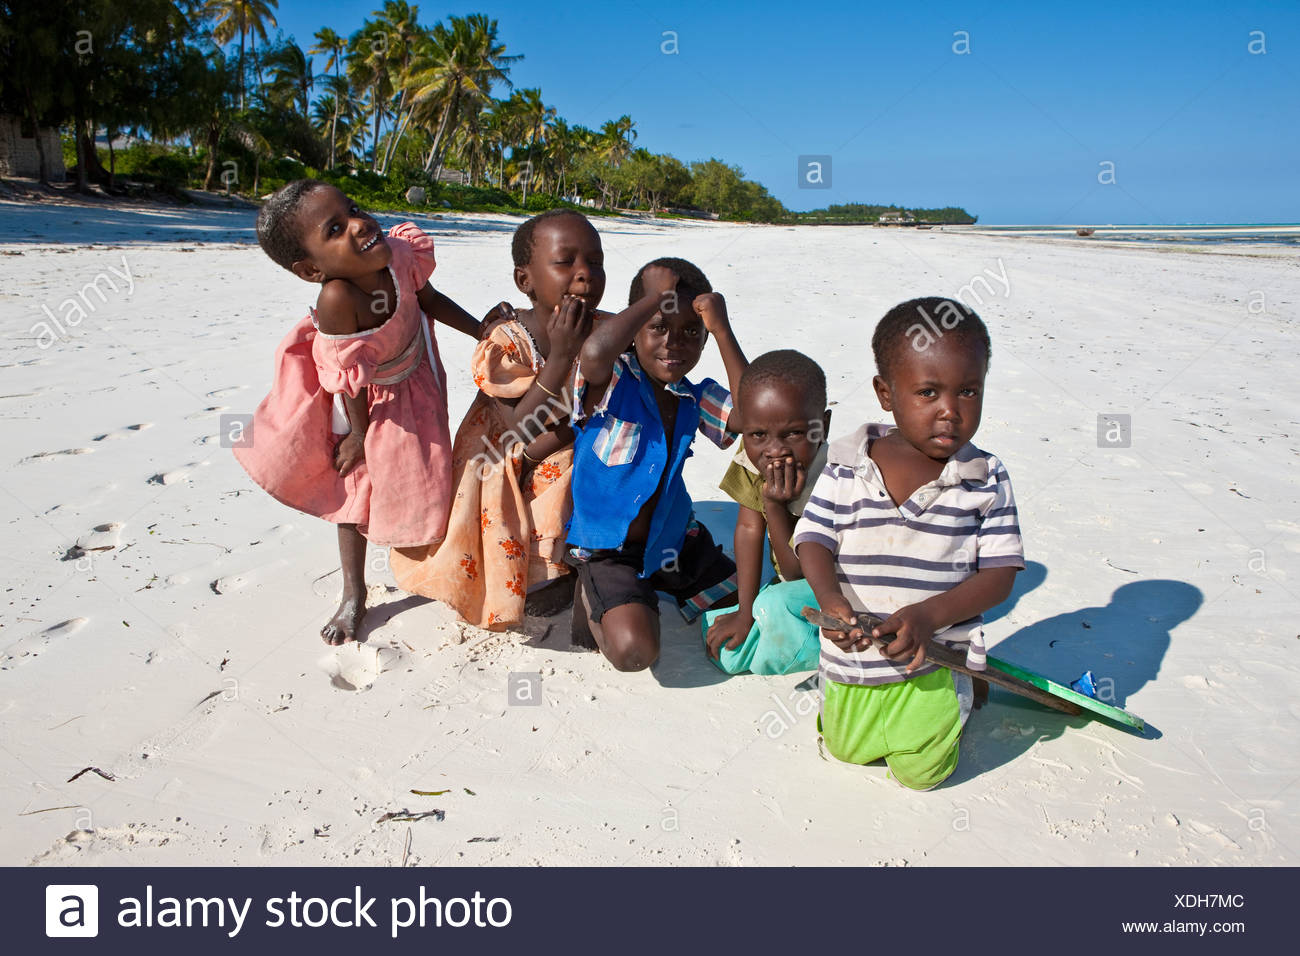 A group of children on the beach at Pingwe, Zanzibar, Tanzania, Africa  Stock Photo - Alamy